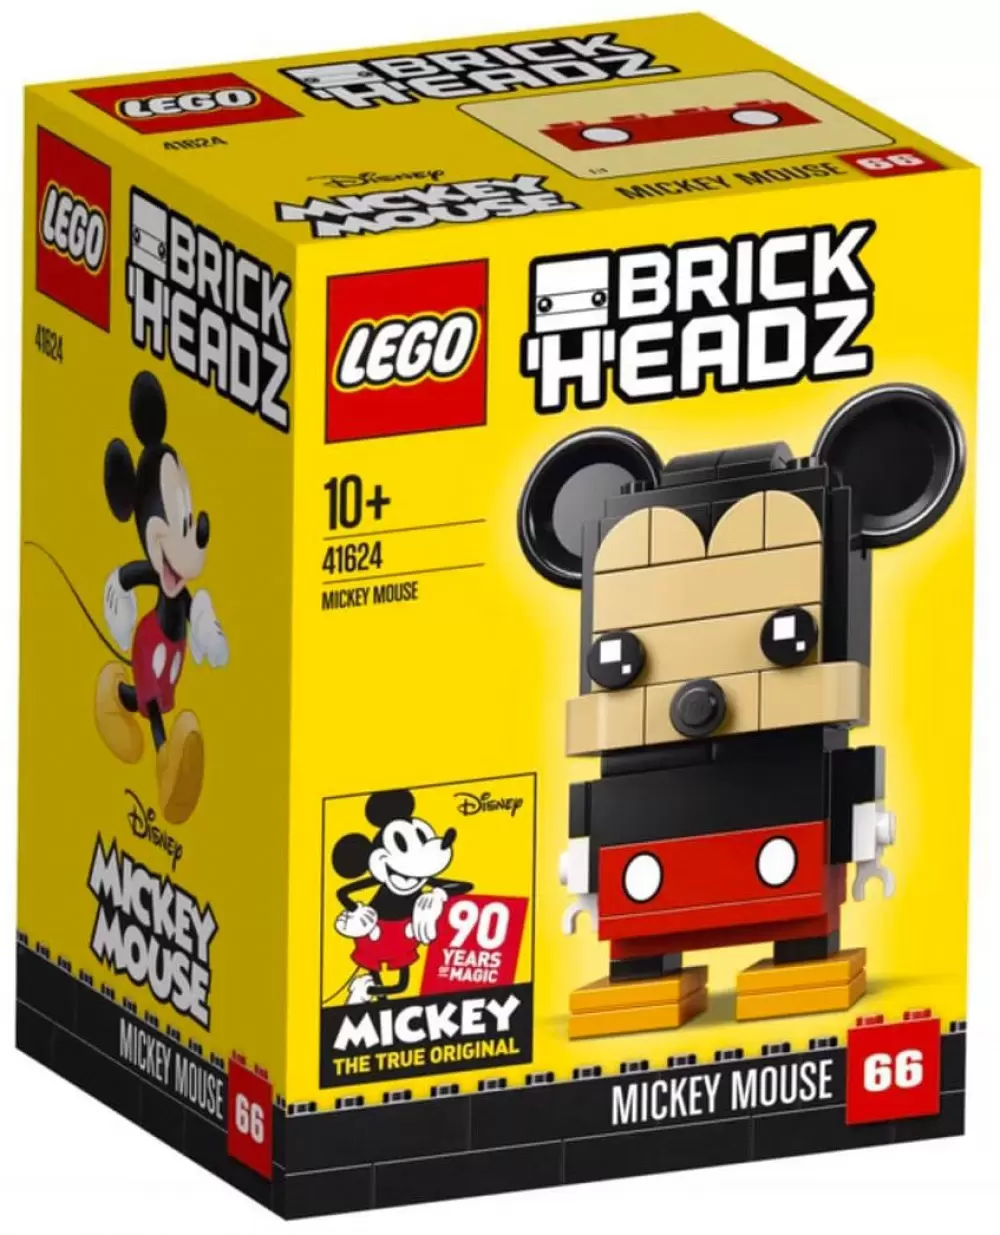 LEGO BrickHeadz - 66 - Mickey Mouse